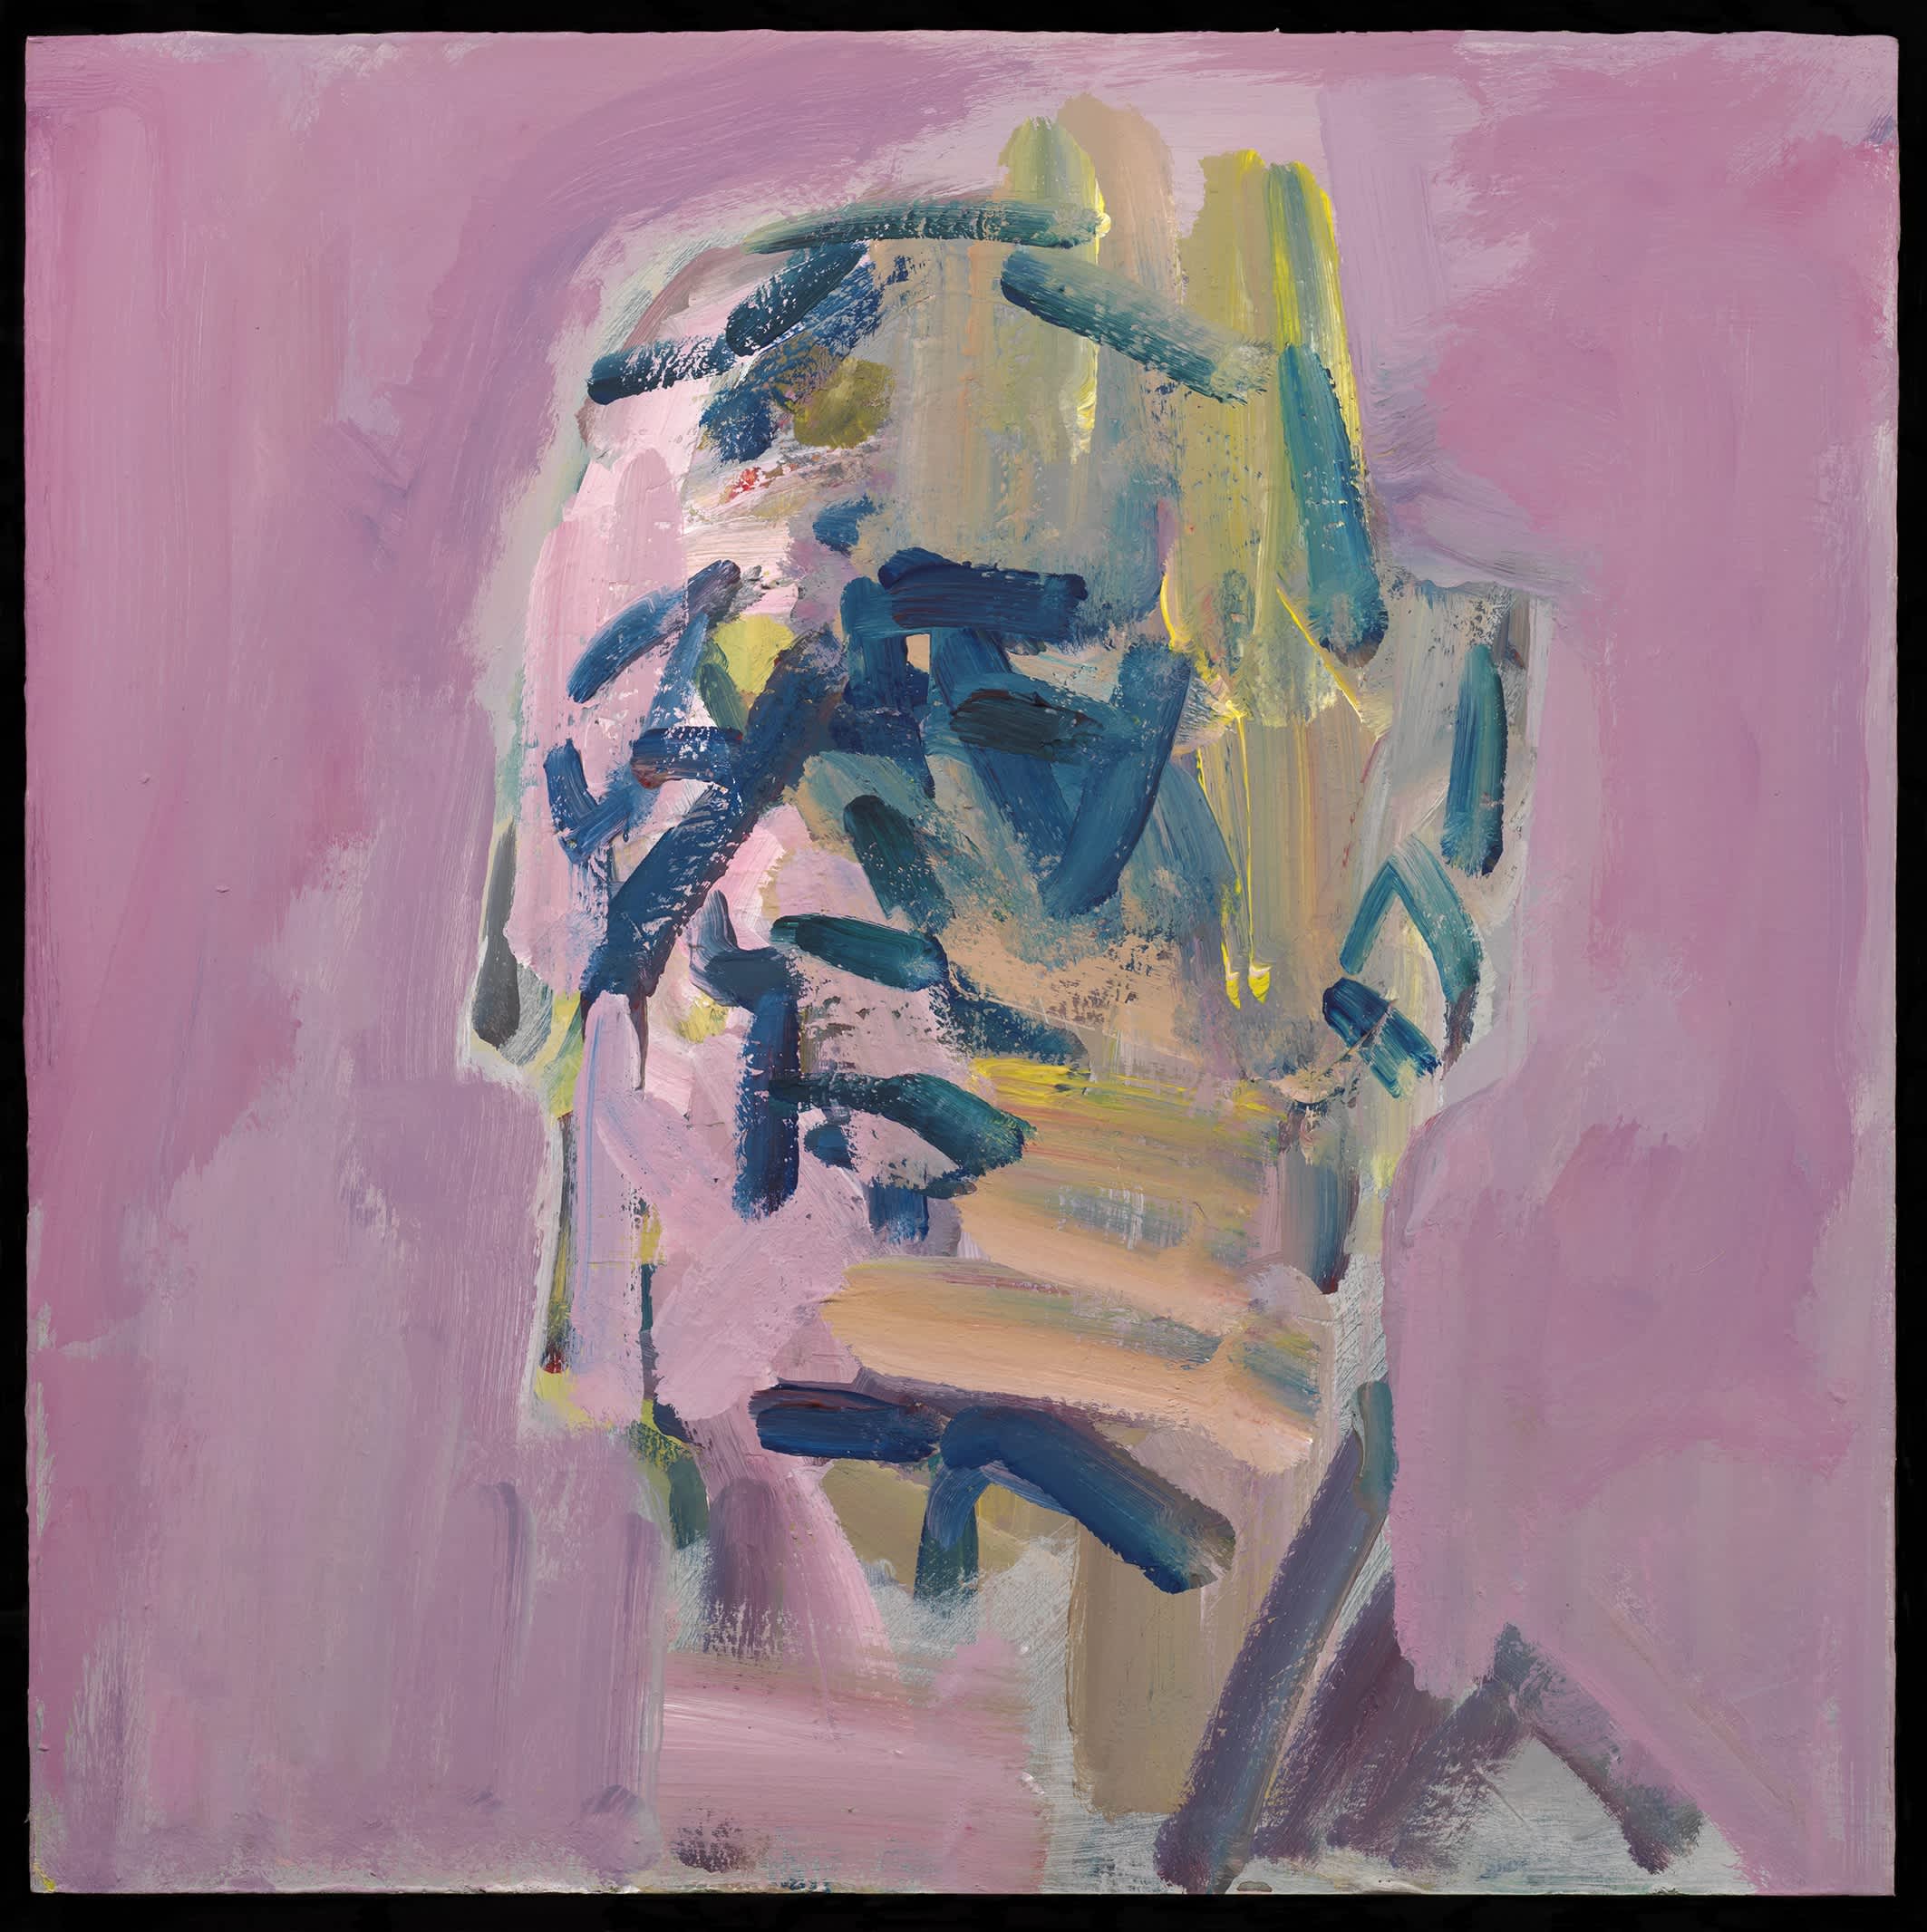 Frank Auerbach: Twenty Self-Portraits